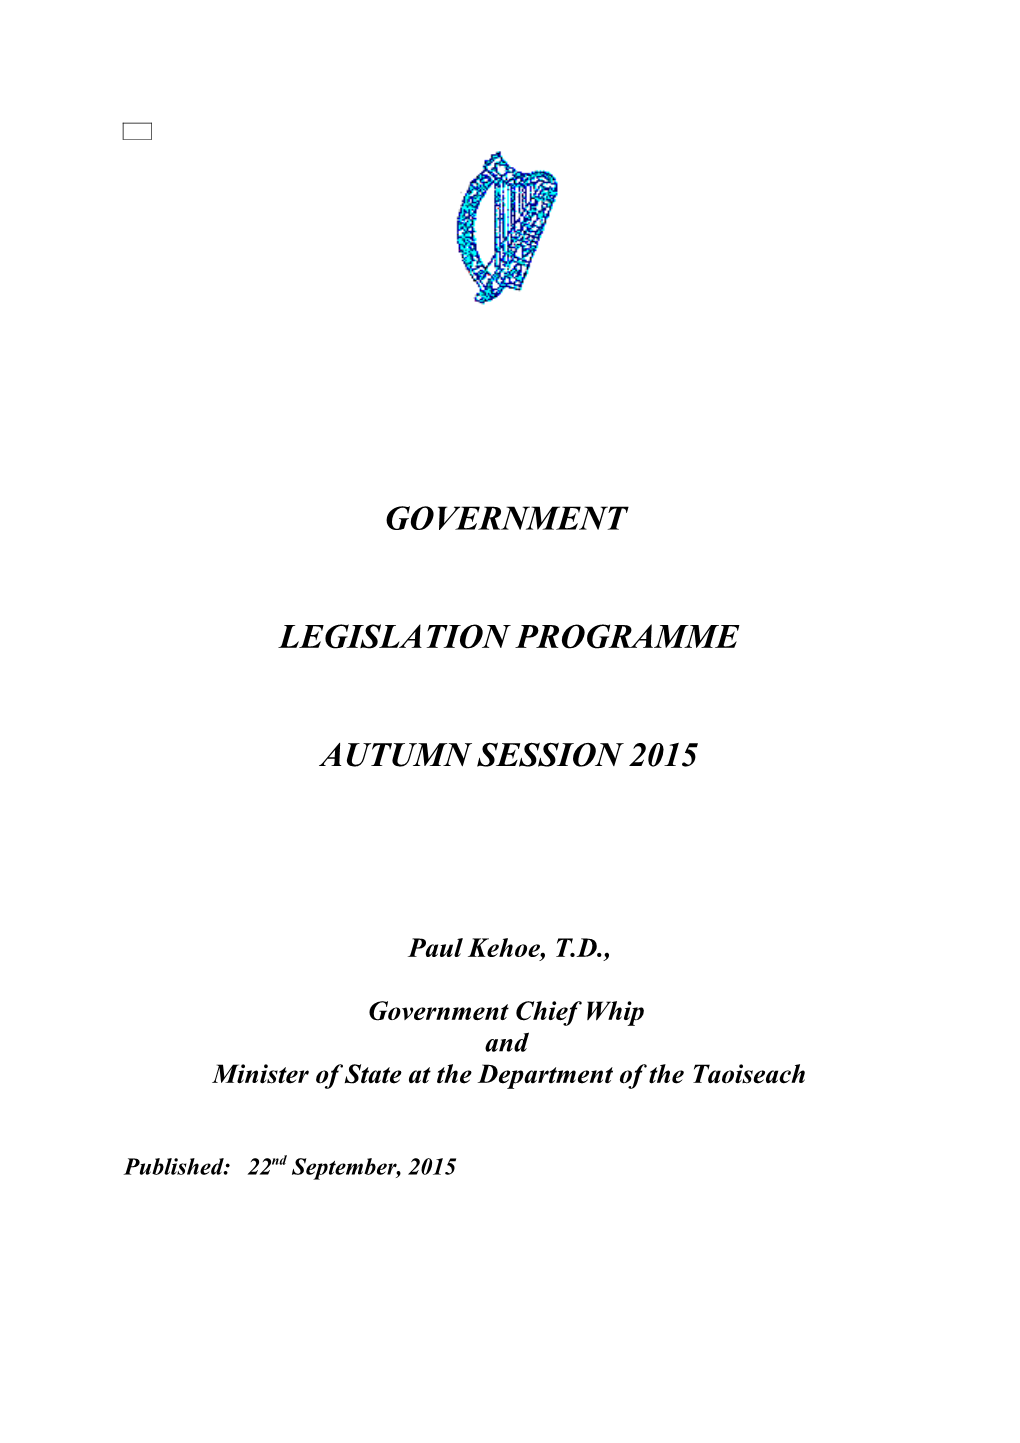 Legislation Programme